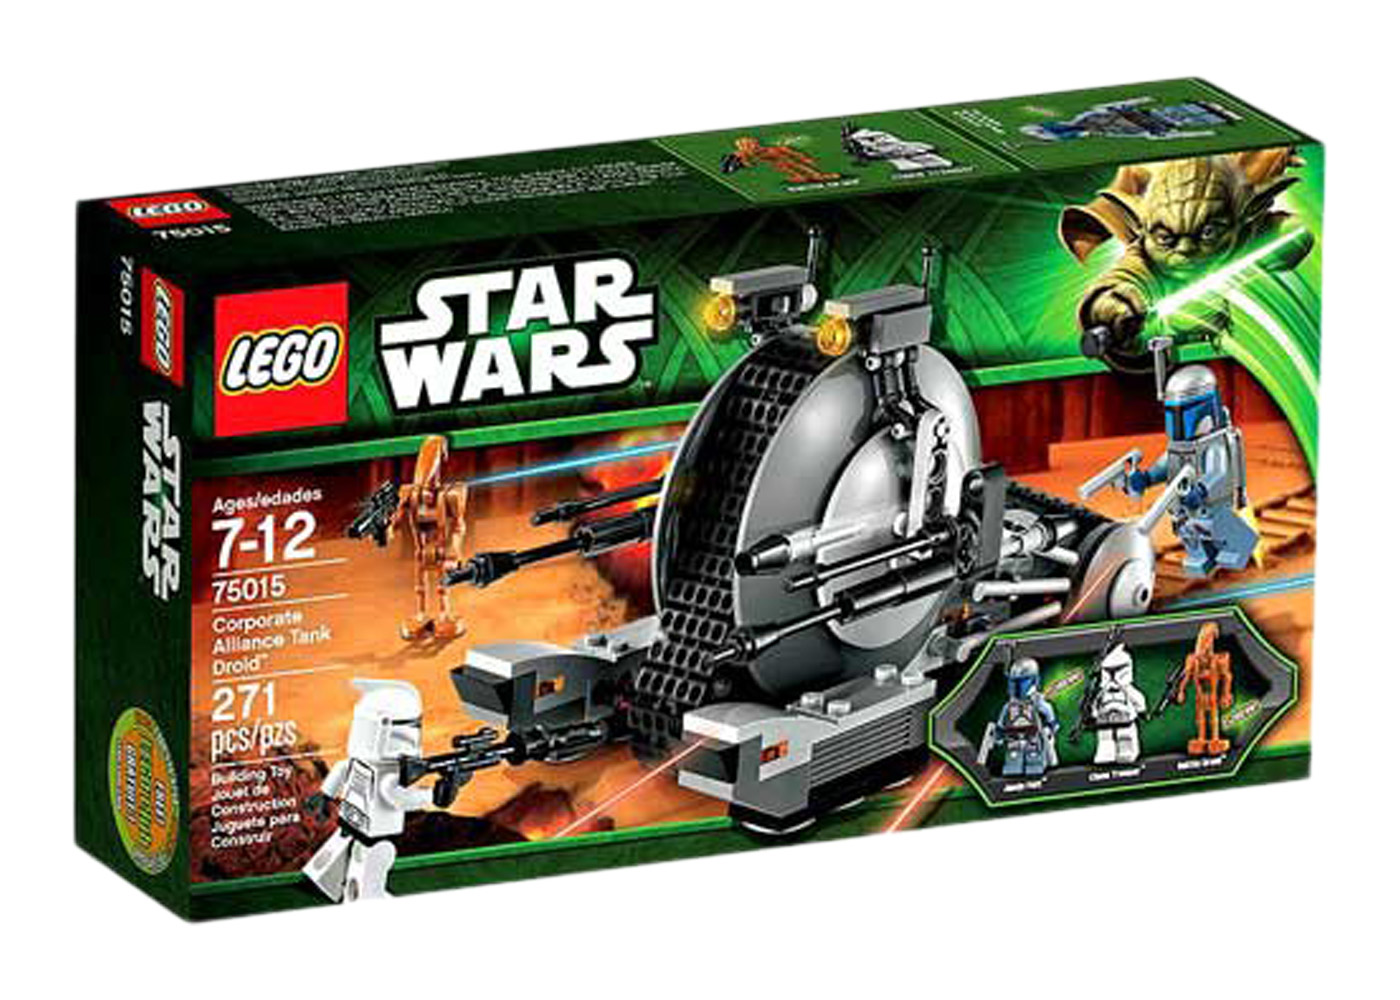 LEGO Star Wars The Clone Wars Corporate Alliance Tank Droid Set 75015